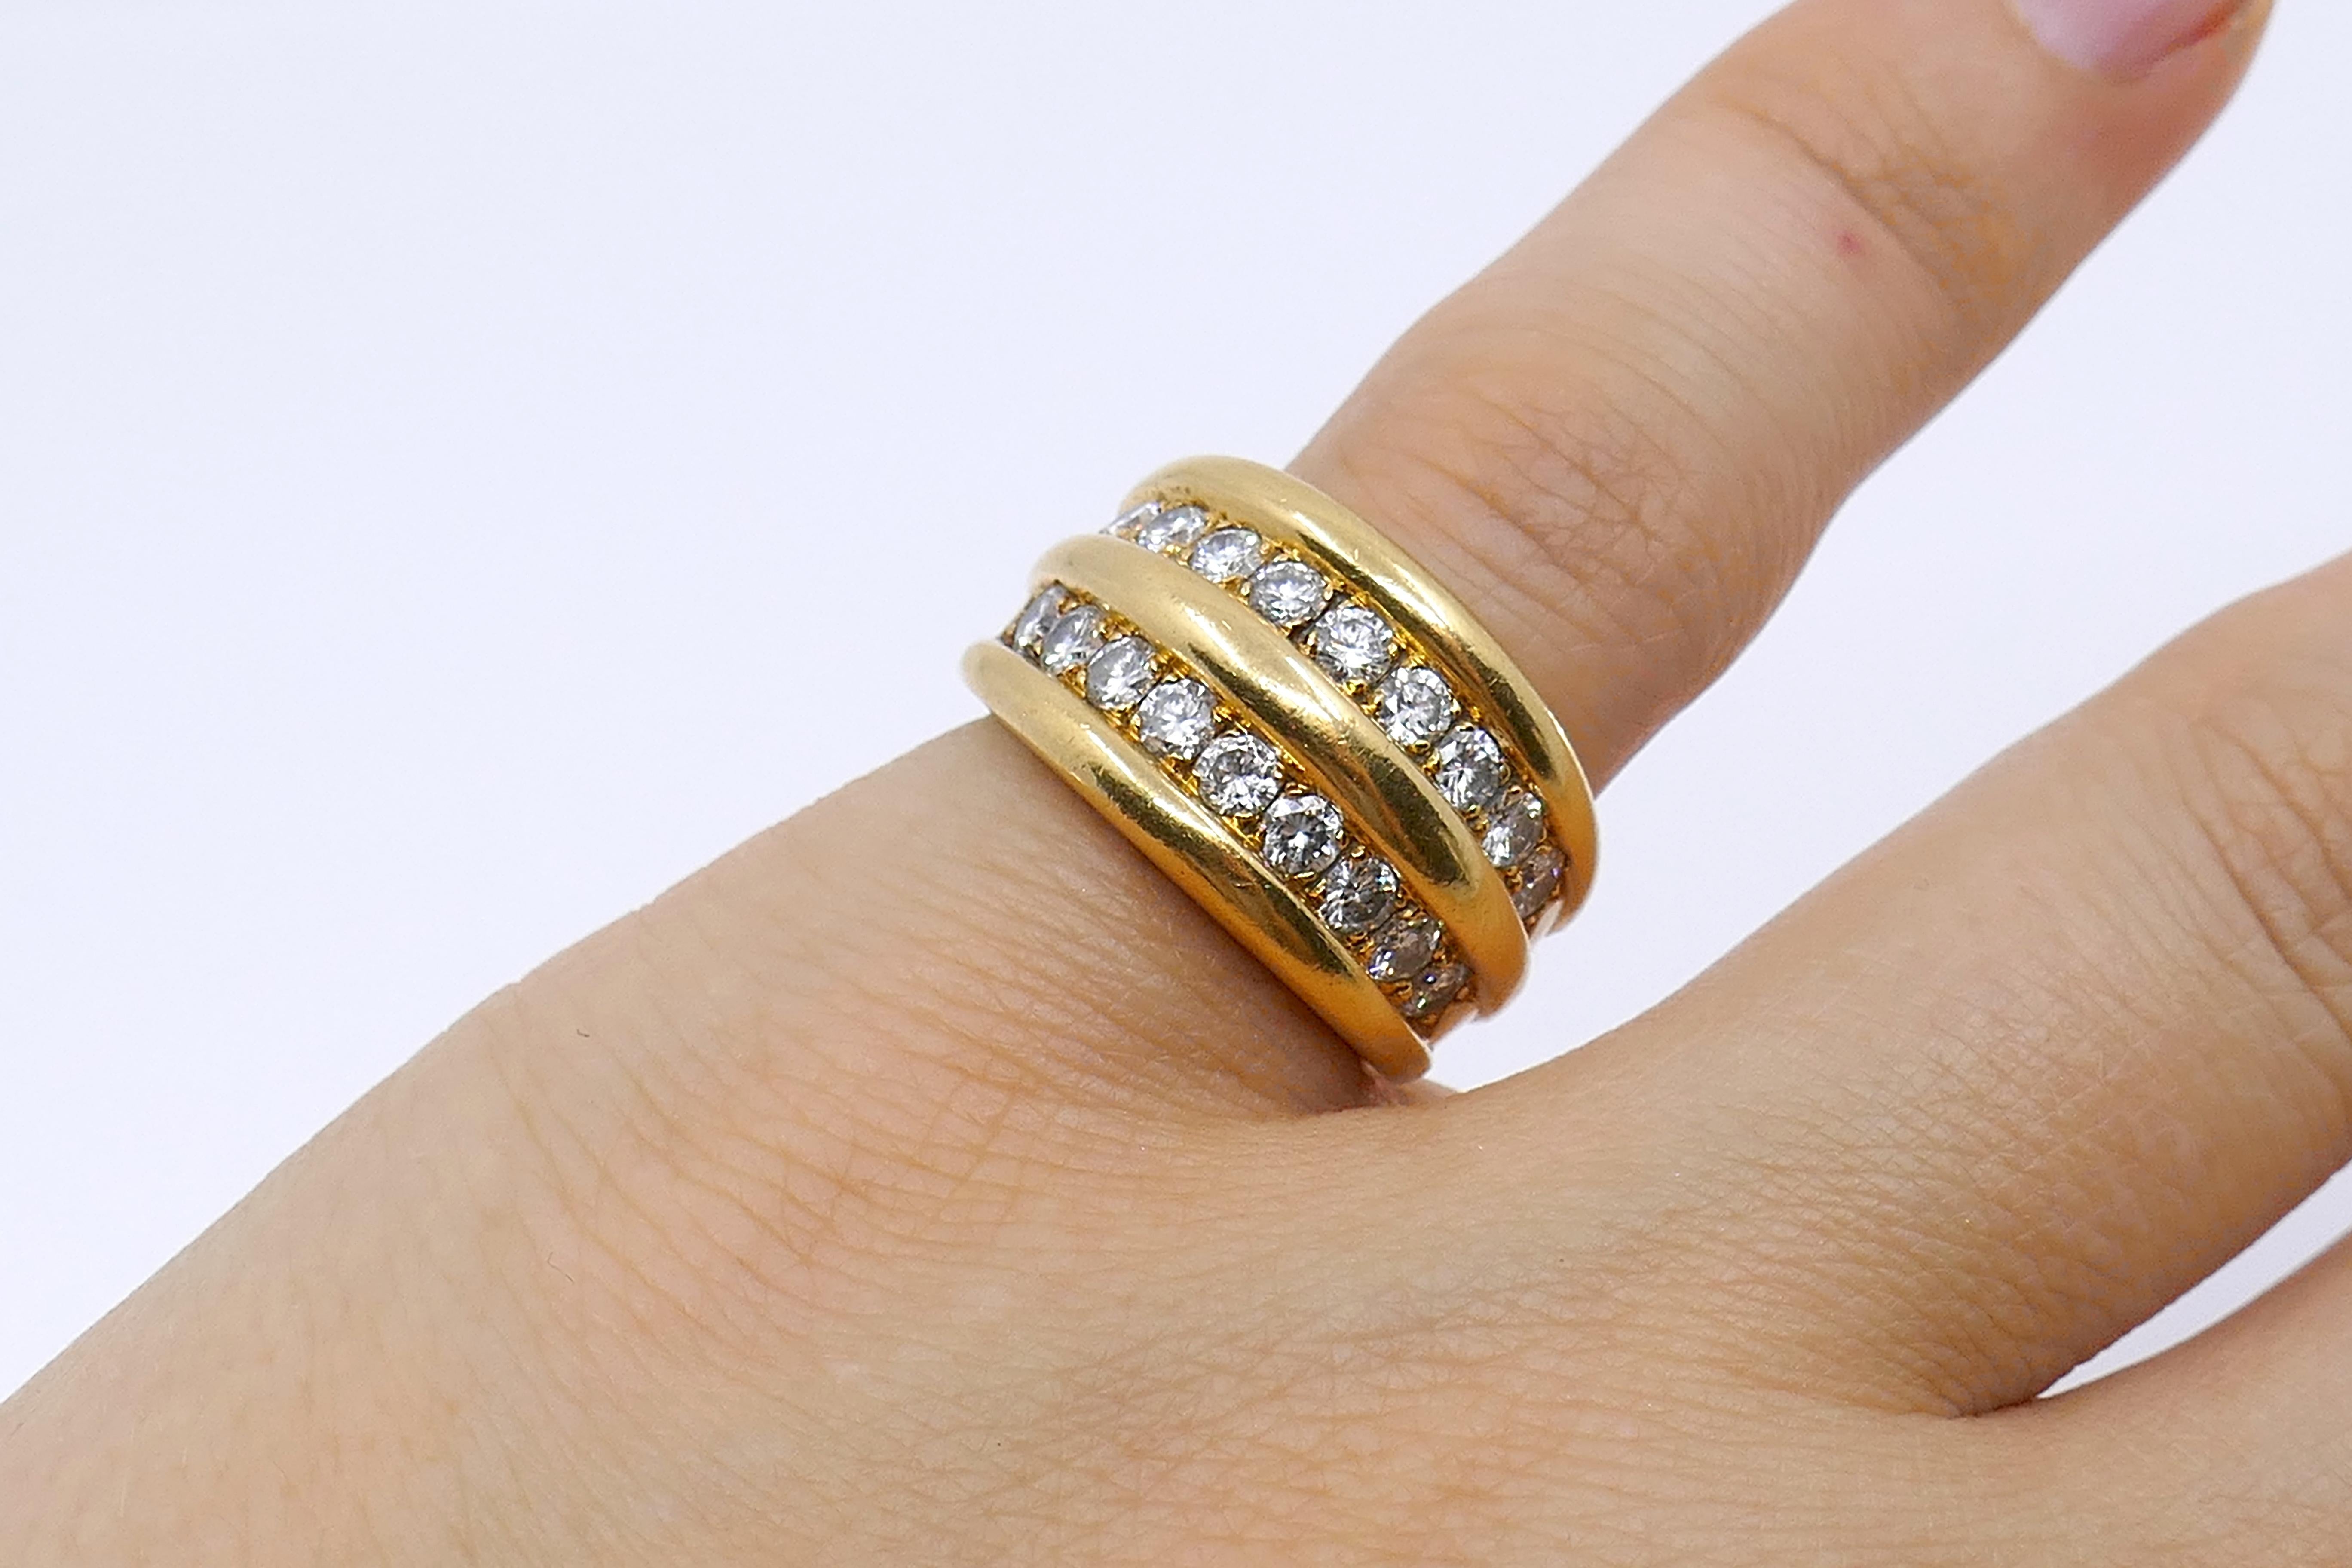 Van Cleef & Arpels Diamond Ring 18k Gold size 6.25 2